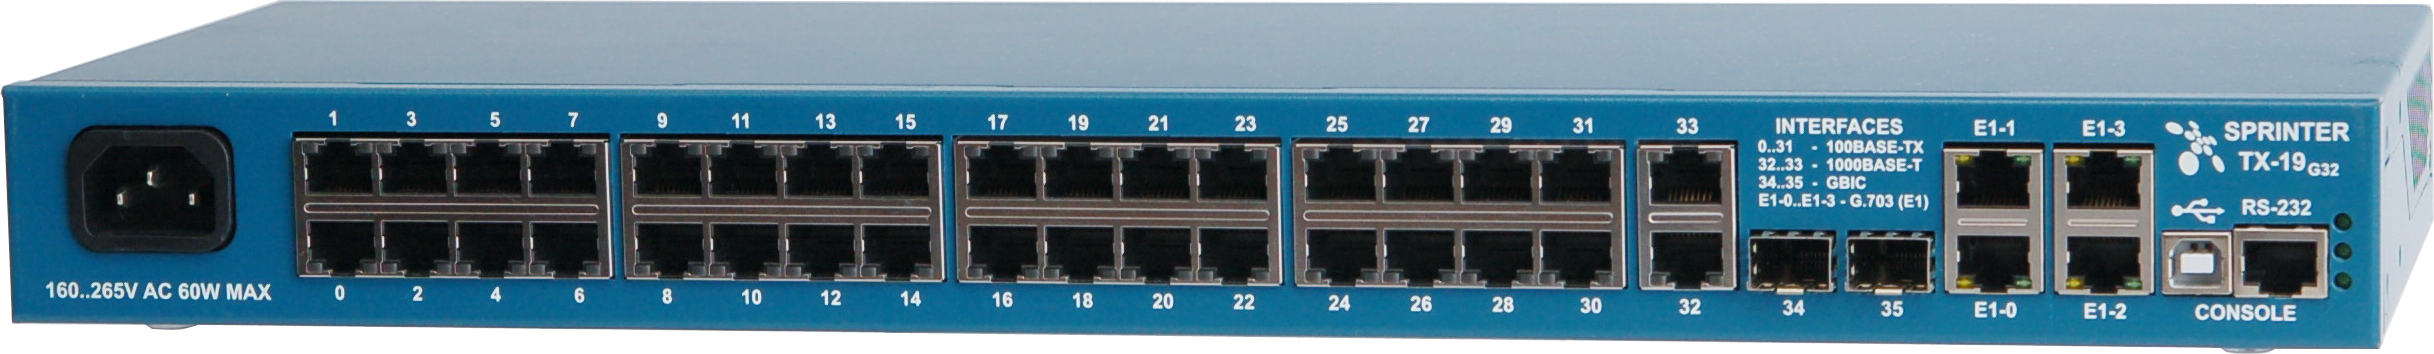 Sprinter TX (32FE), 4 интерфейса Е1, 32 интерфейса Fast Ethernet, 2 интерфейса Gigabit Ethernet, 2 гнезда SFP (Gigabit Ethernet)